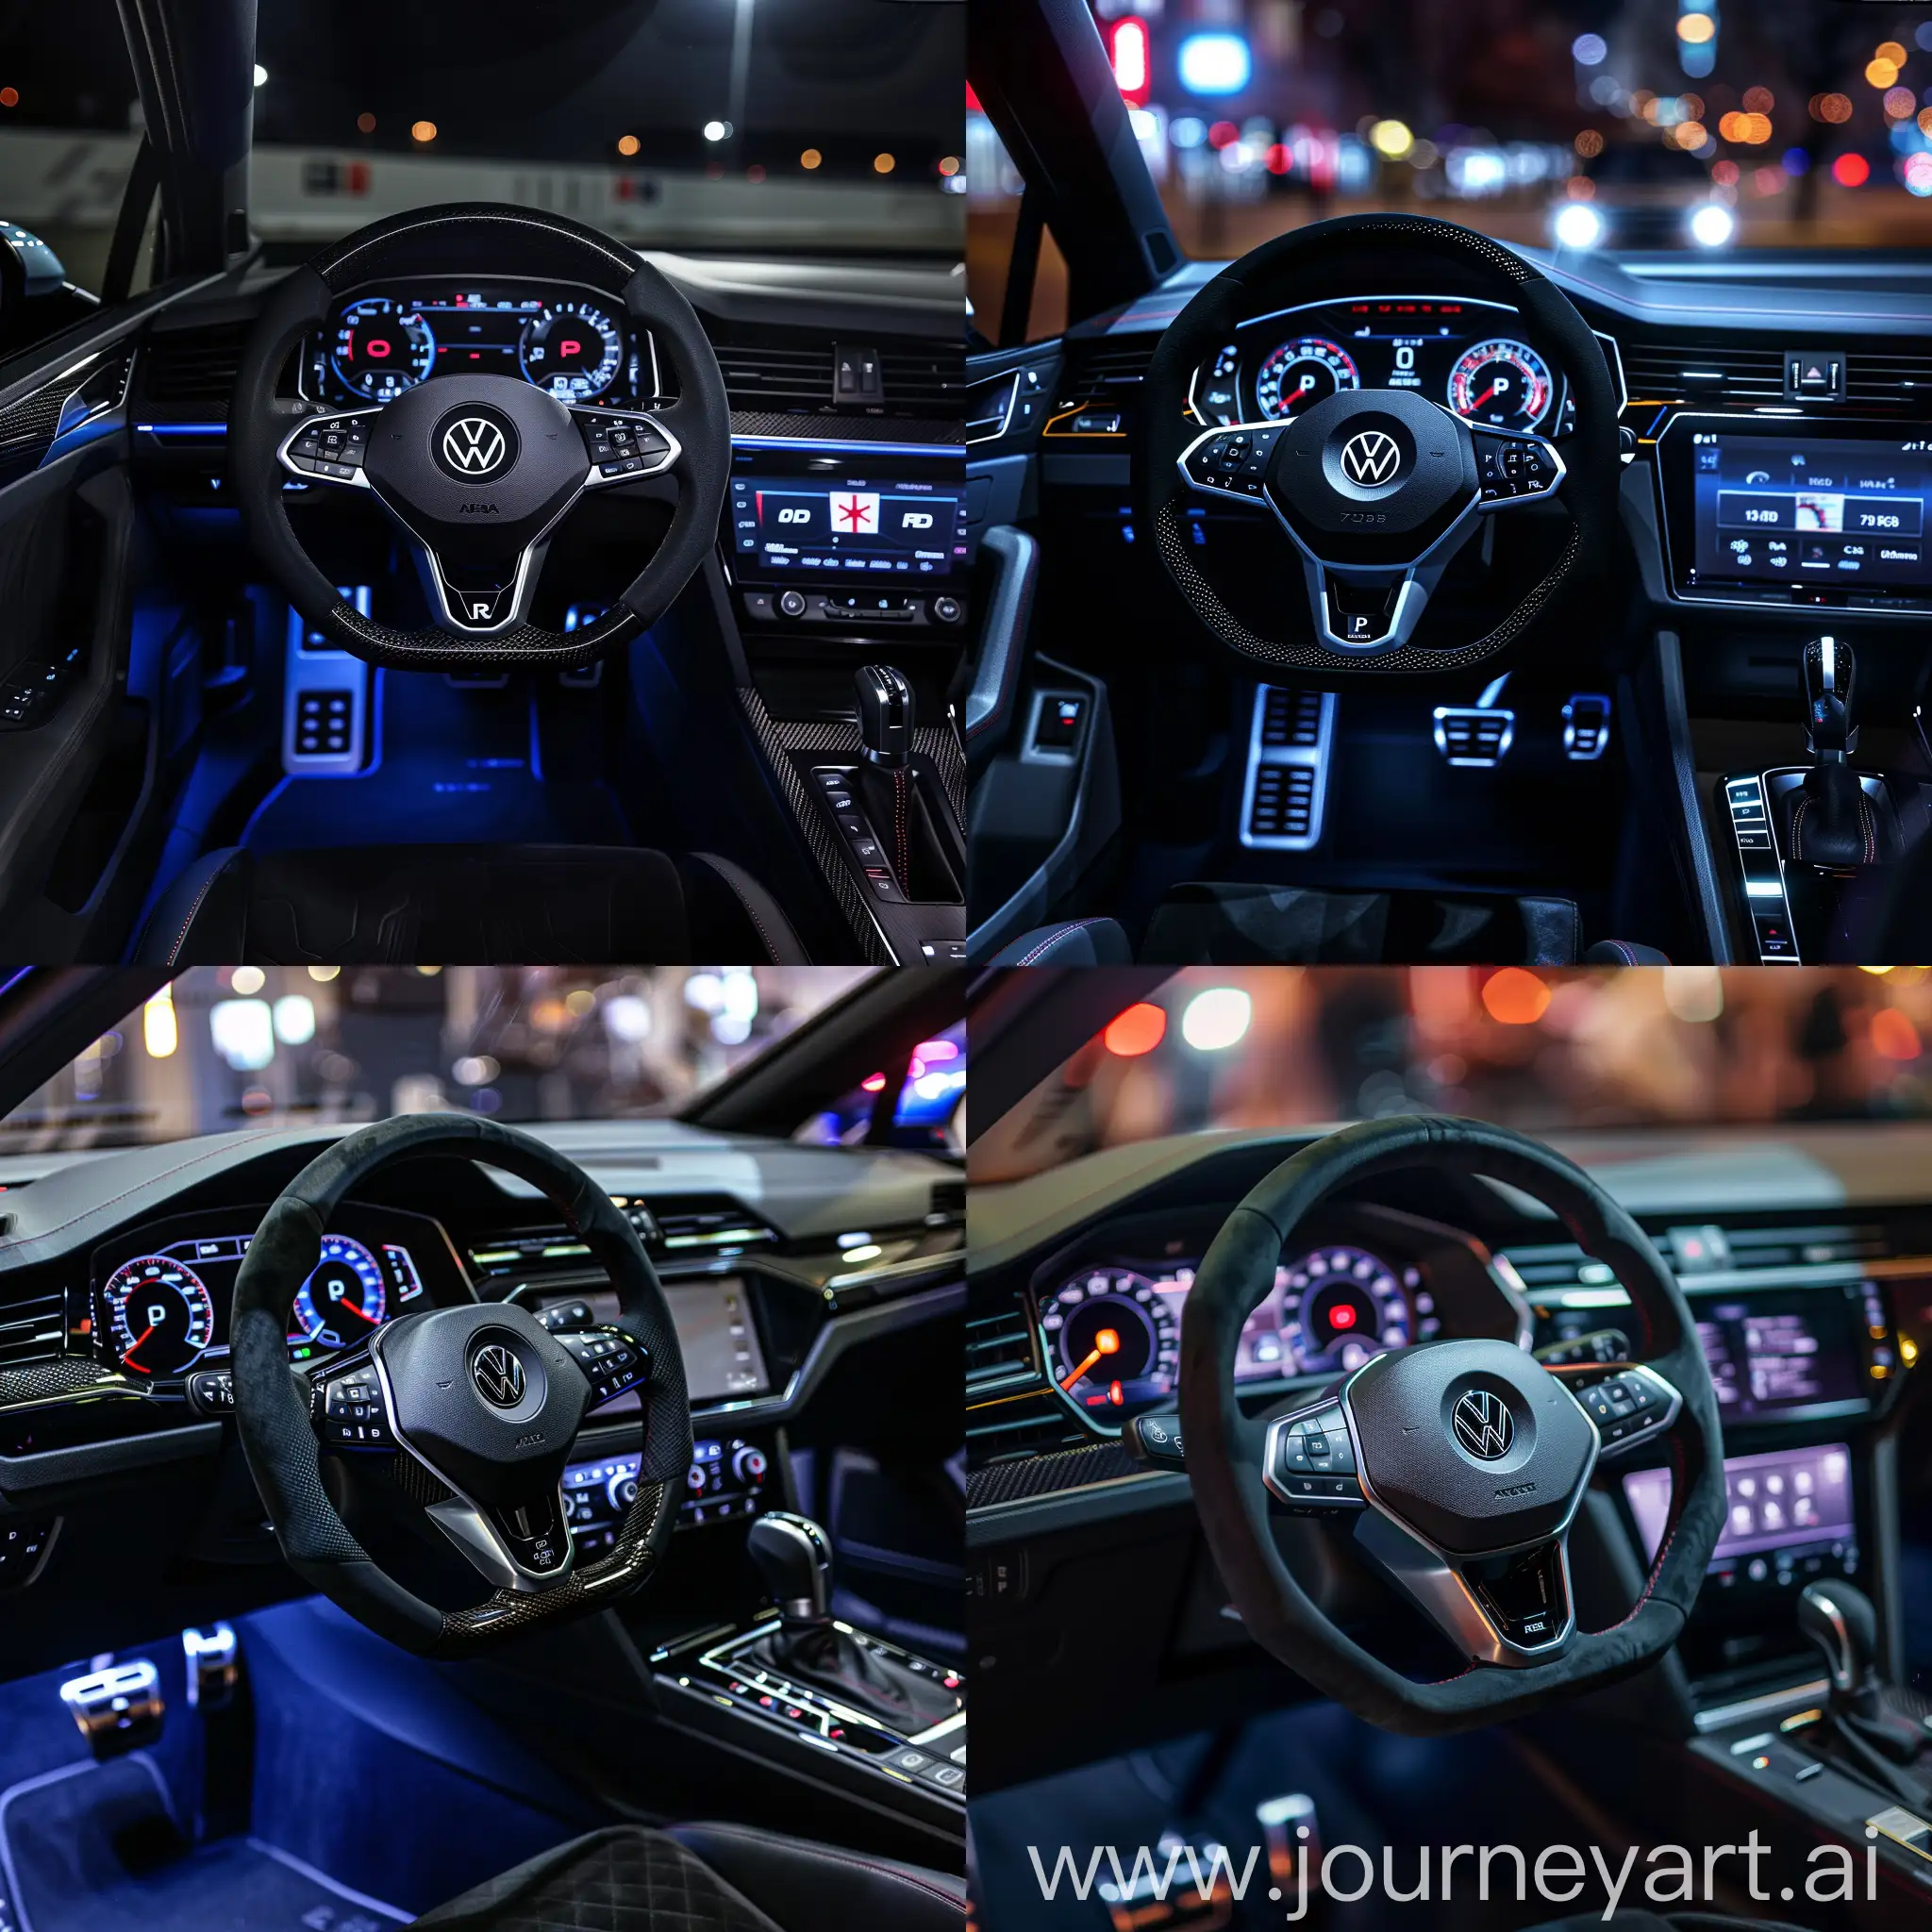 Luxurious-Golf-MK7-R-2018-Interior-Black-Carbon-Design-and-Virtual-Cockpit